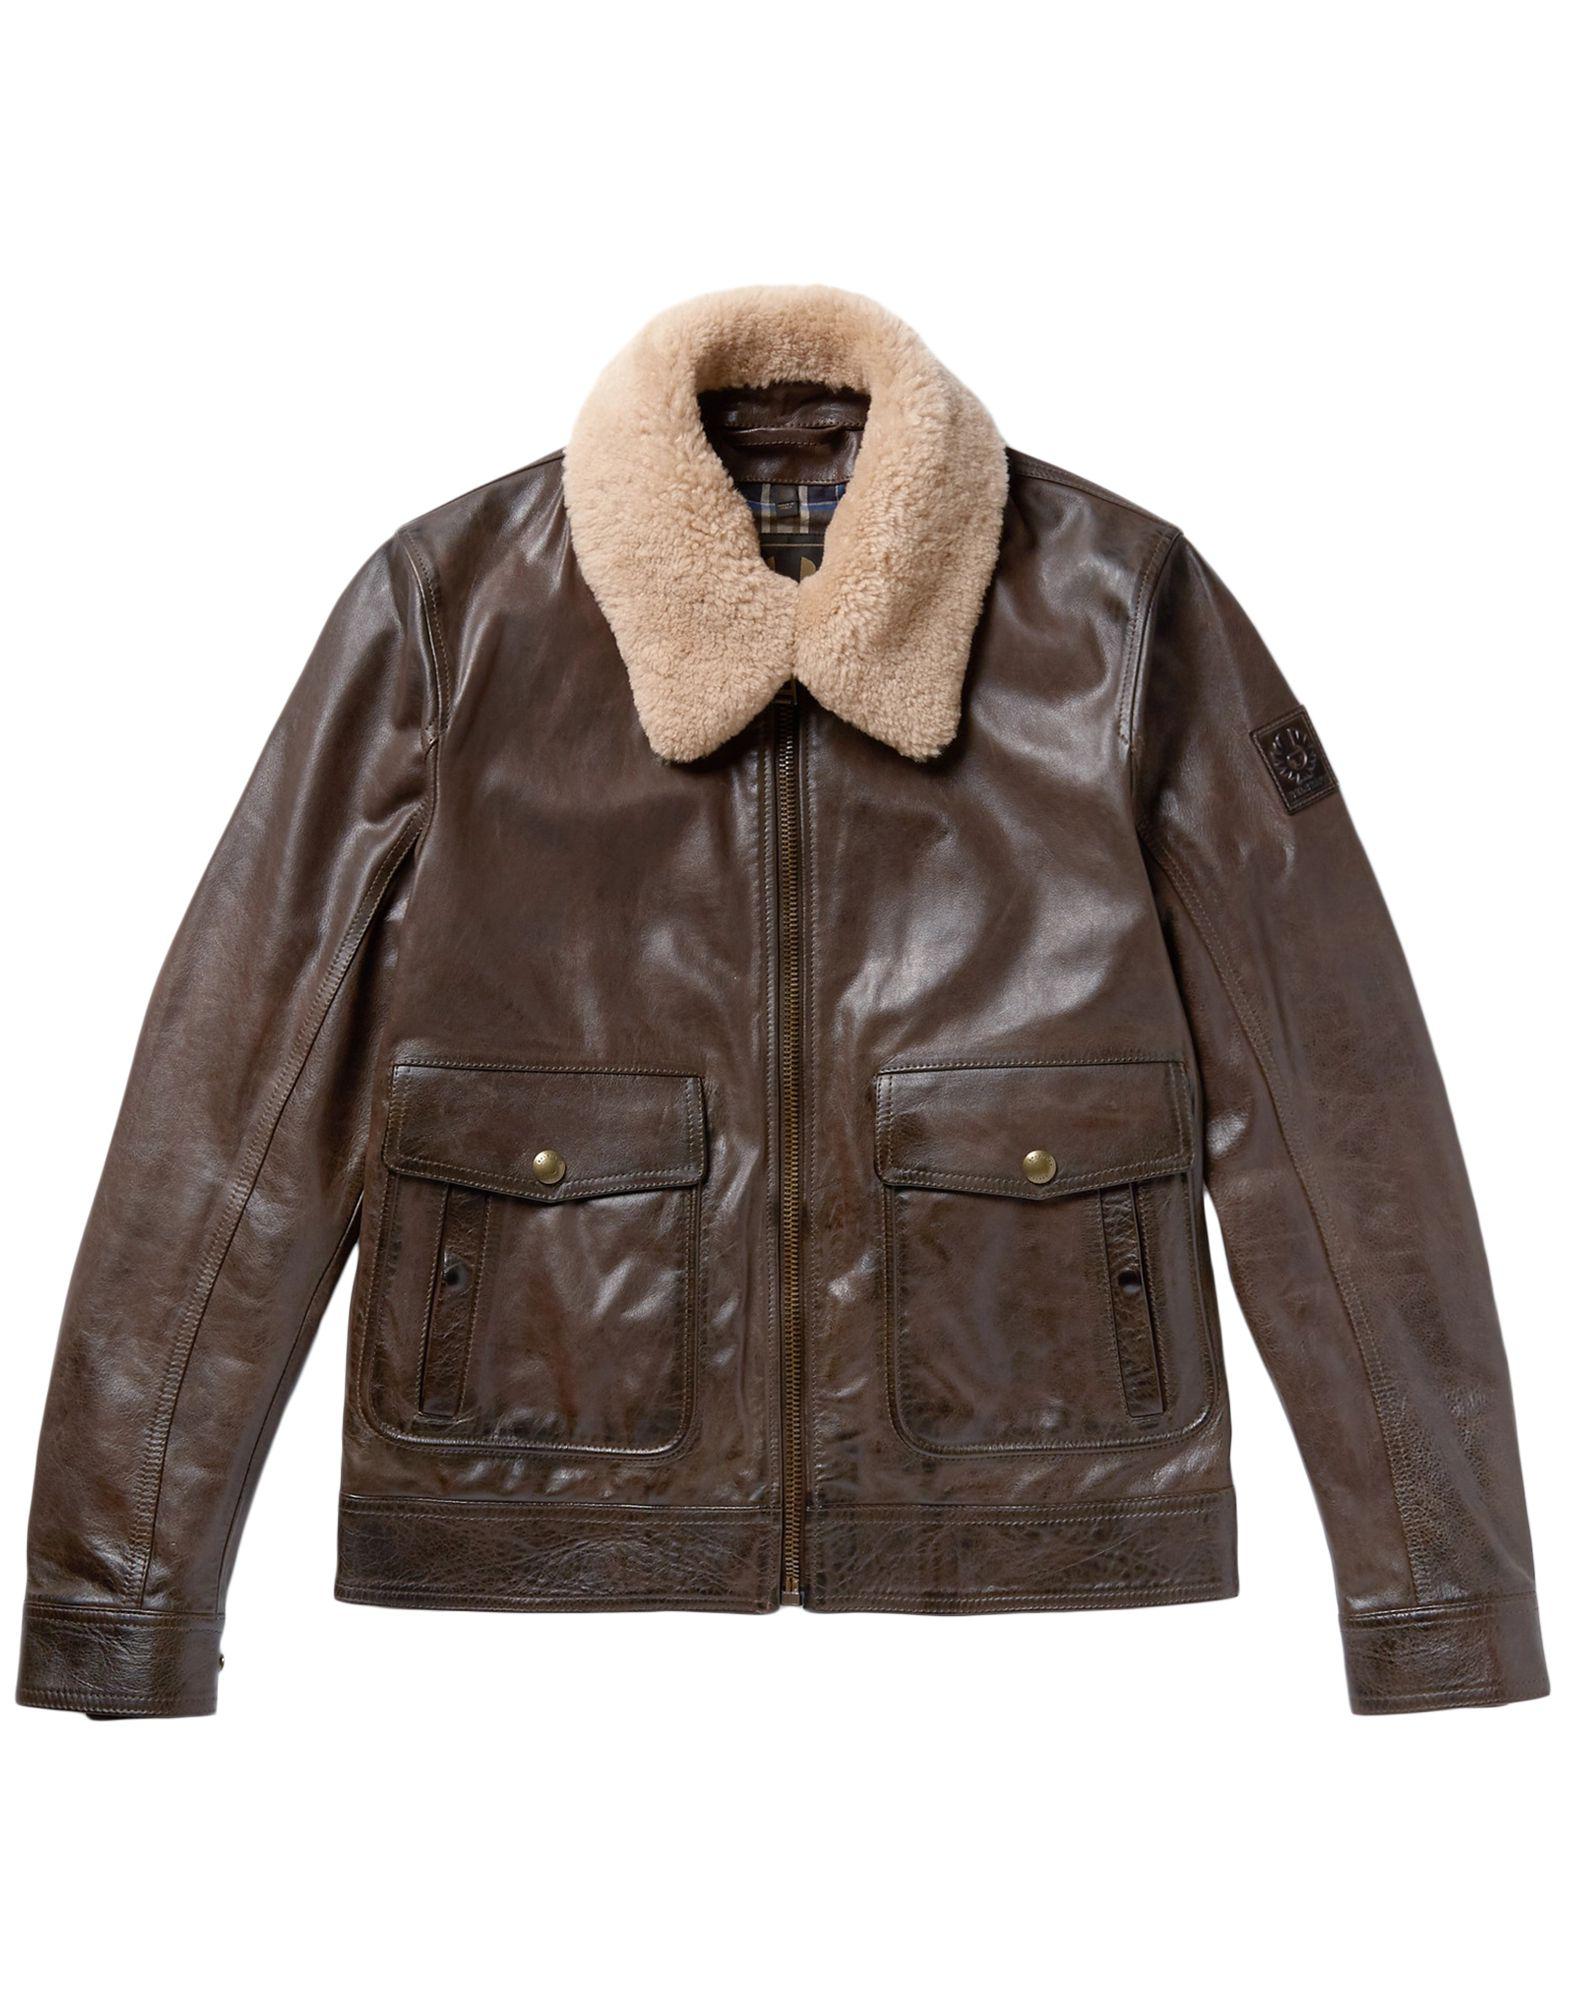 Belstaff Mentmore Shearling-trimmed Leather Jacket in Dark Brown (Brown)  for Men - Lyst